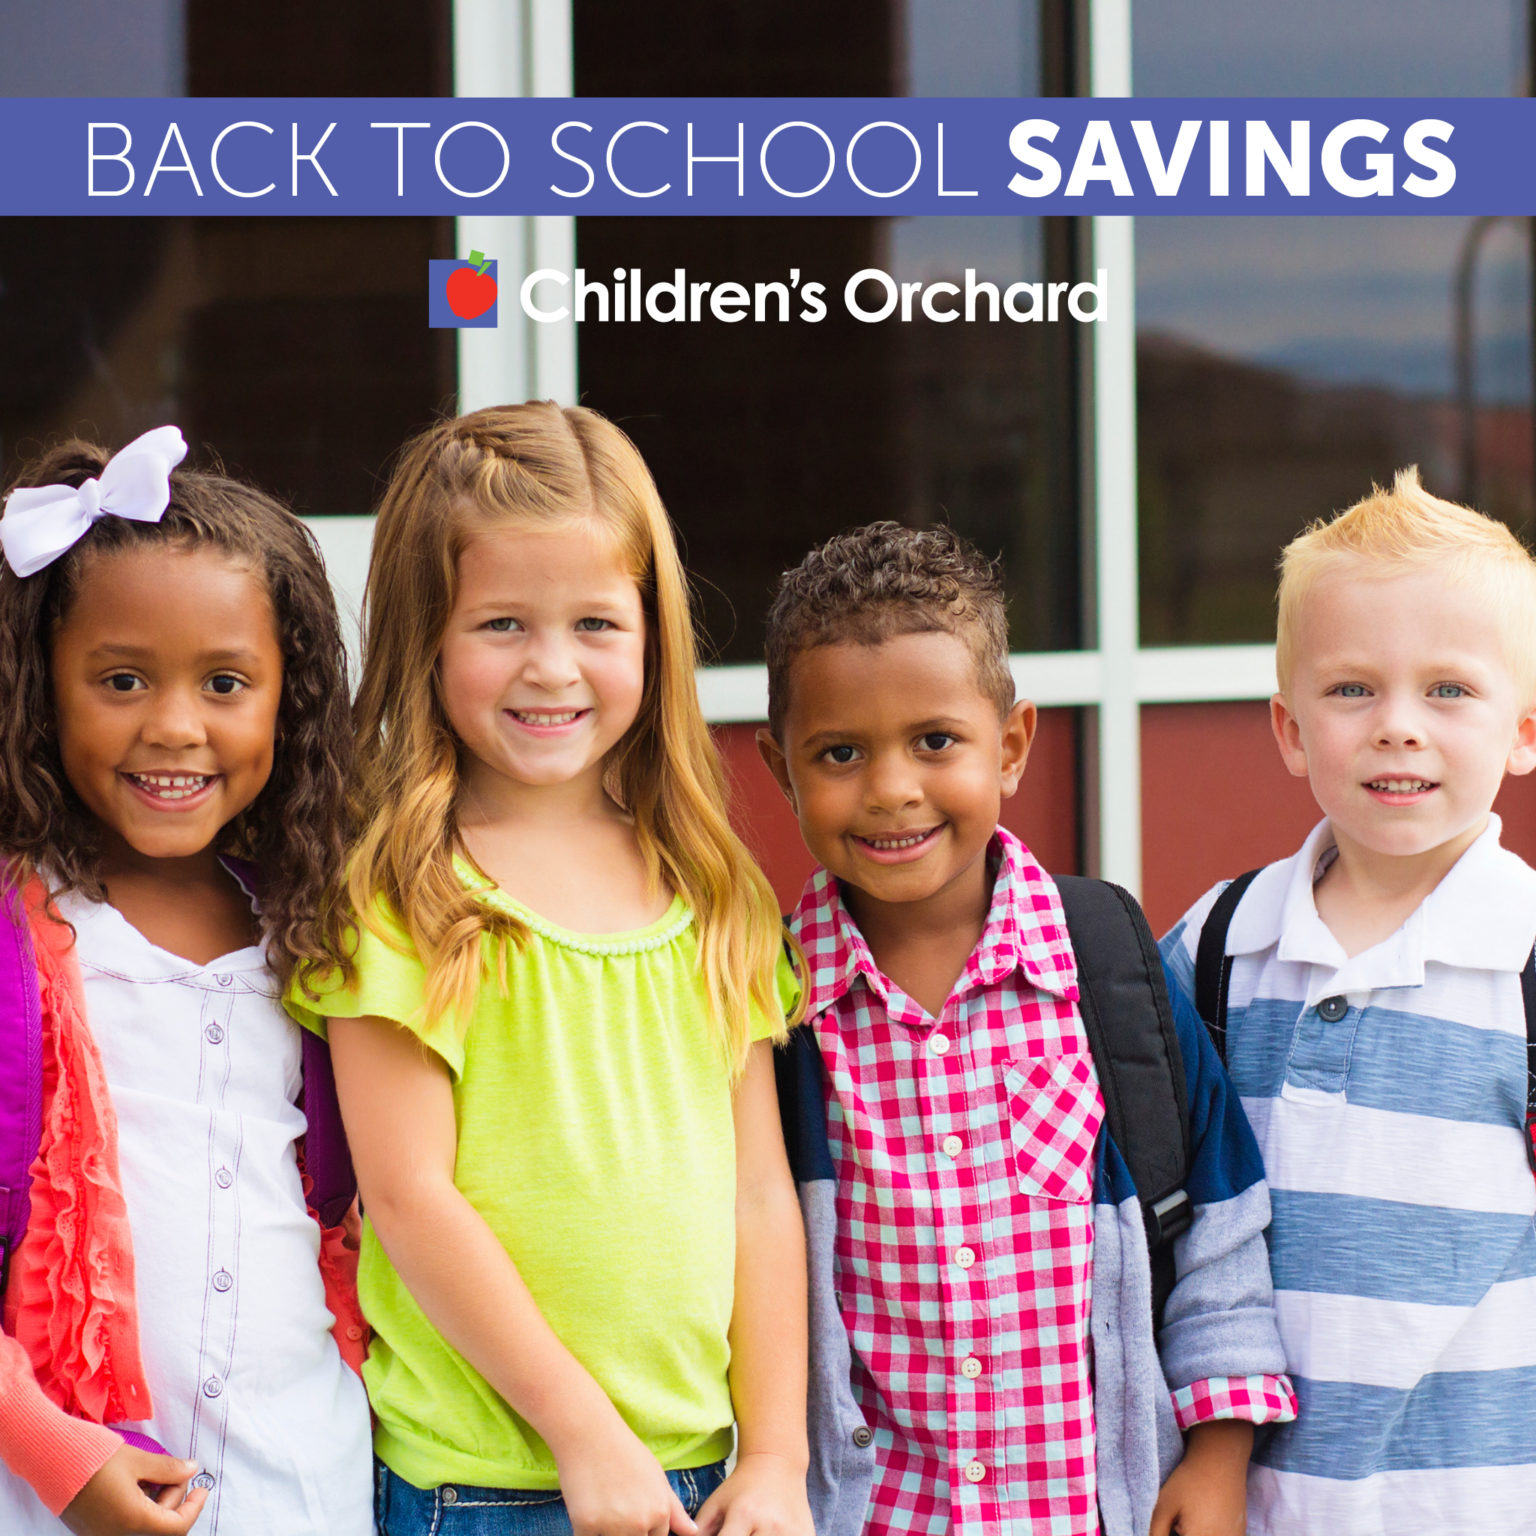 Back to school savings. Group of kids outside of school.